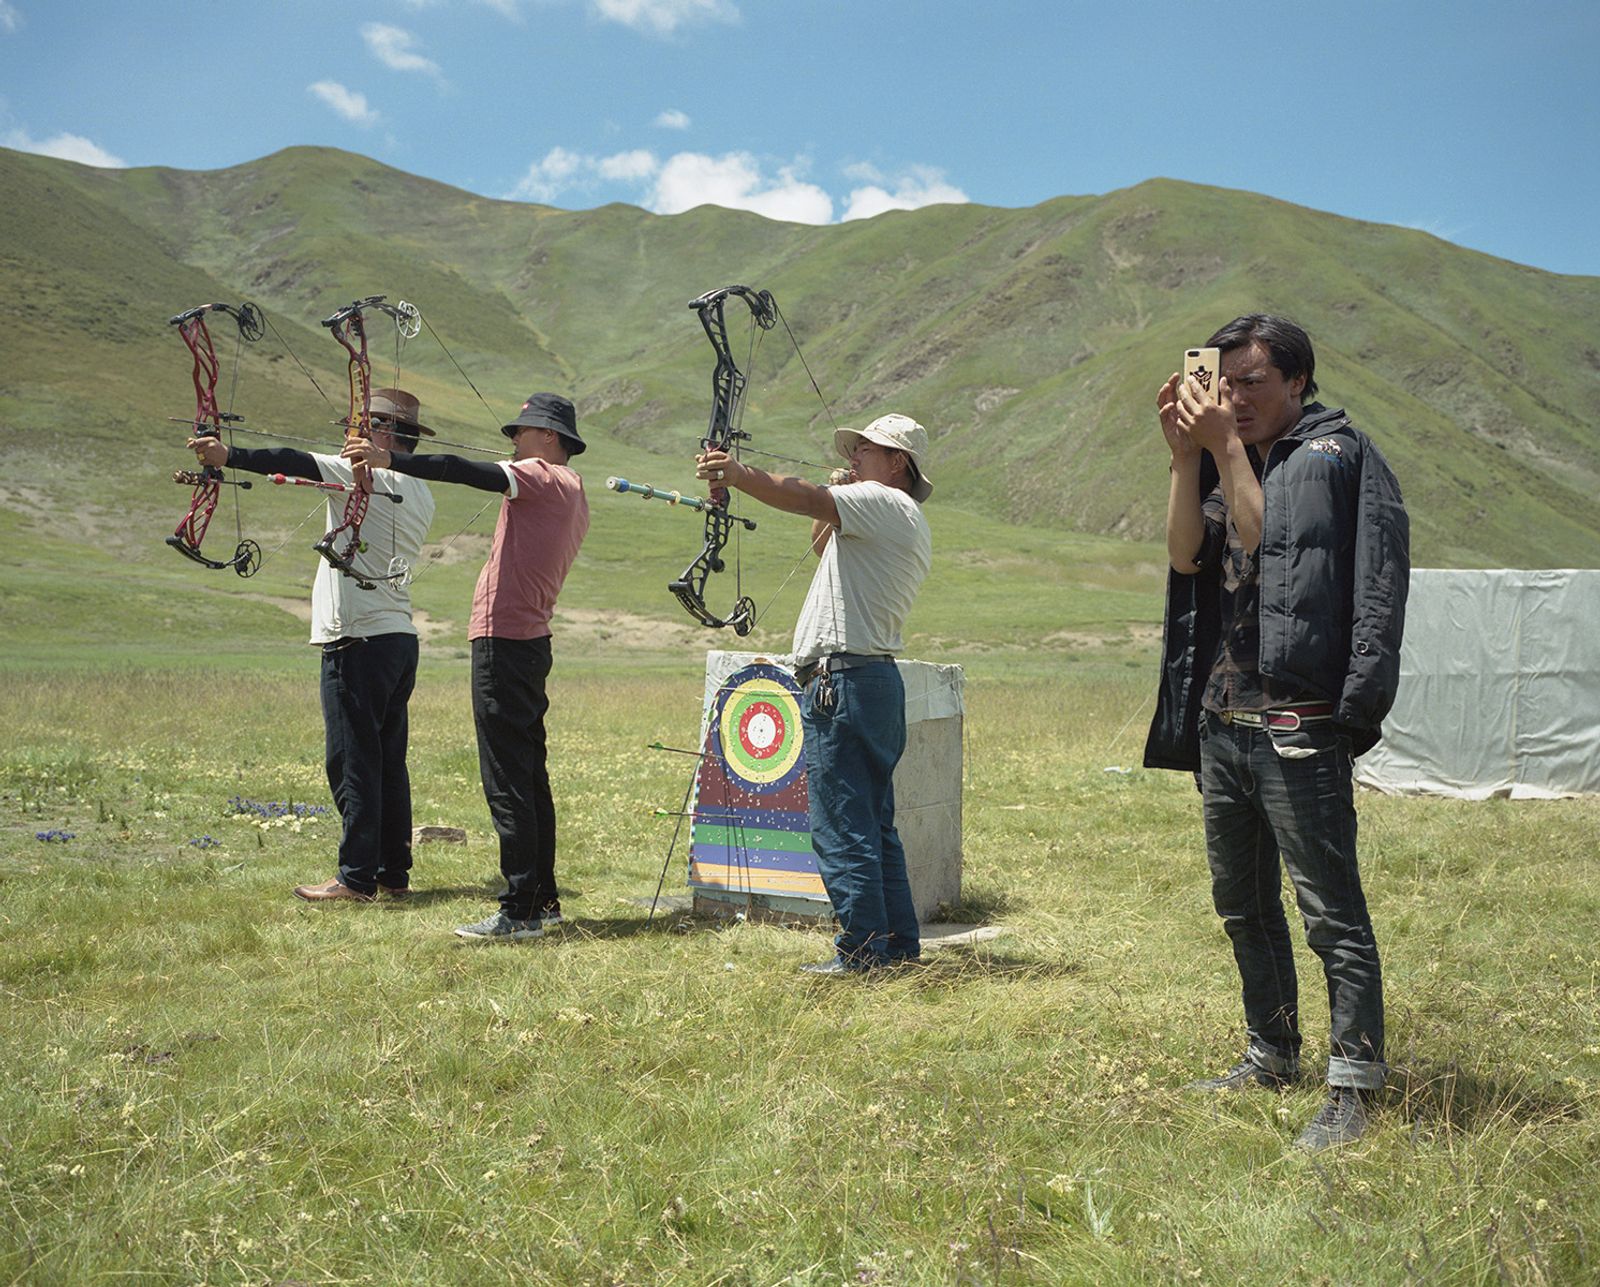 © Hao Wu - Tibetan men play archery. Da’ri, Tibetan Autonomous Prefecture of Golog, Qinghai province, China, 2018.